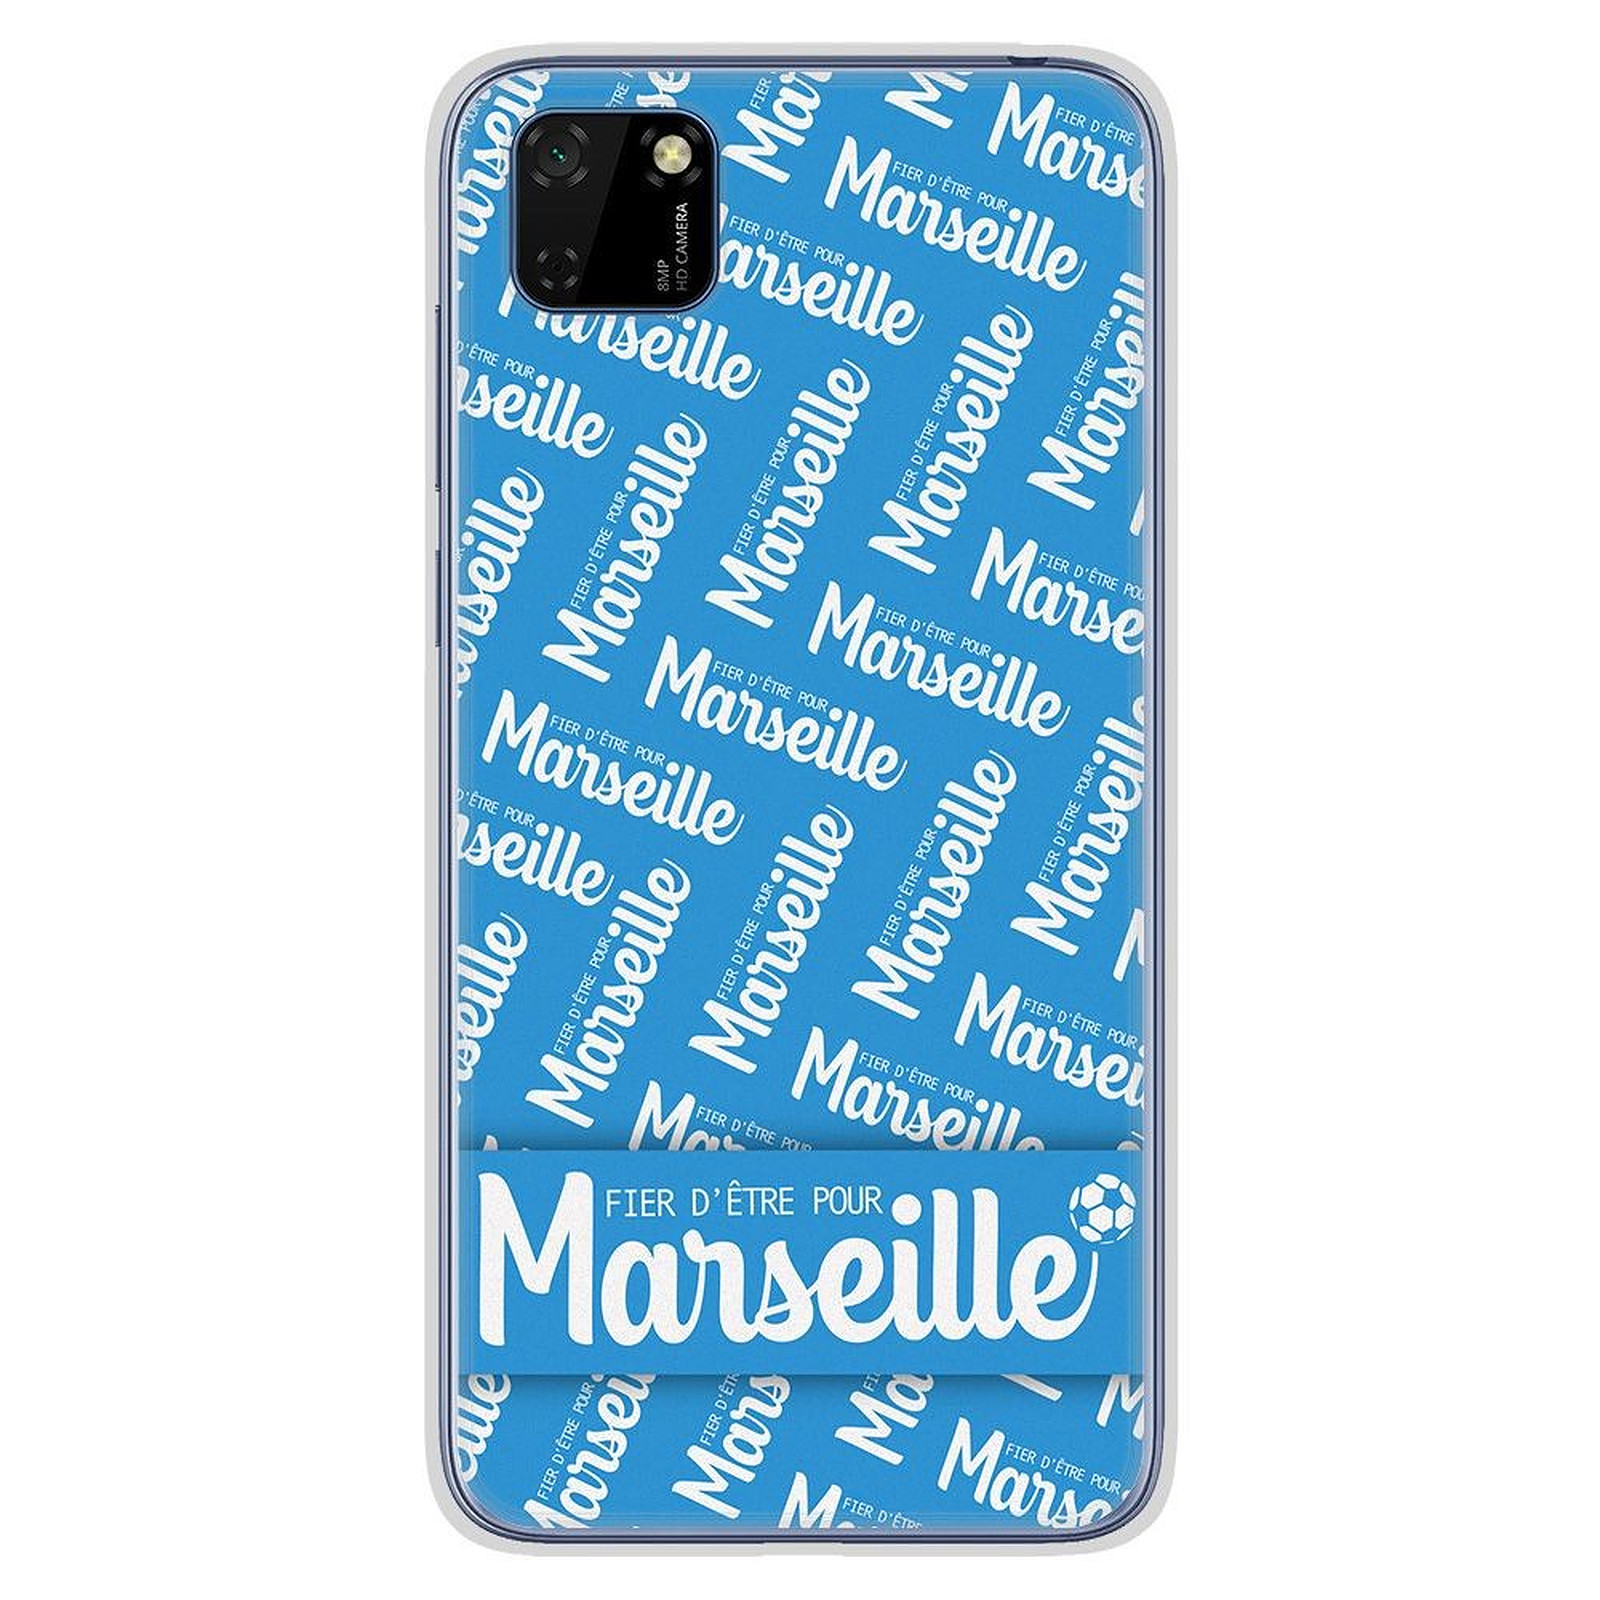 1001 Coques Coque silicone gel Huawei Y5P motif Fier d'etre pour Marseille - Coque telephone 1001Coques